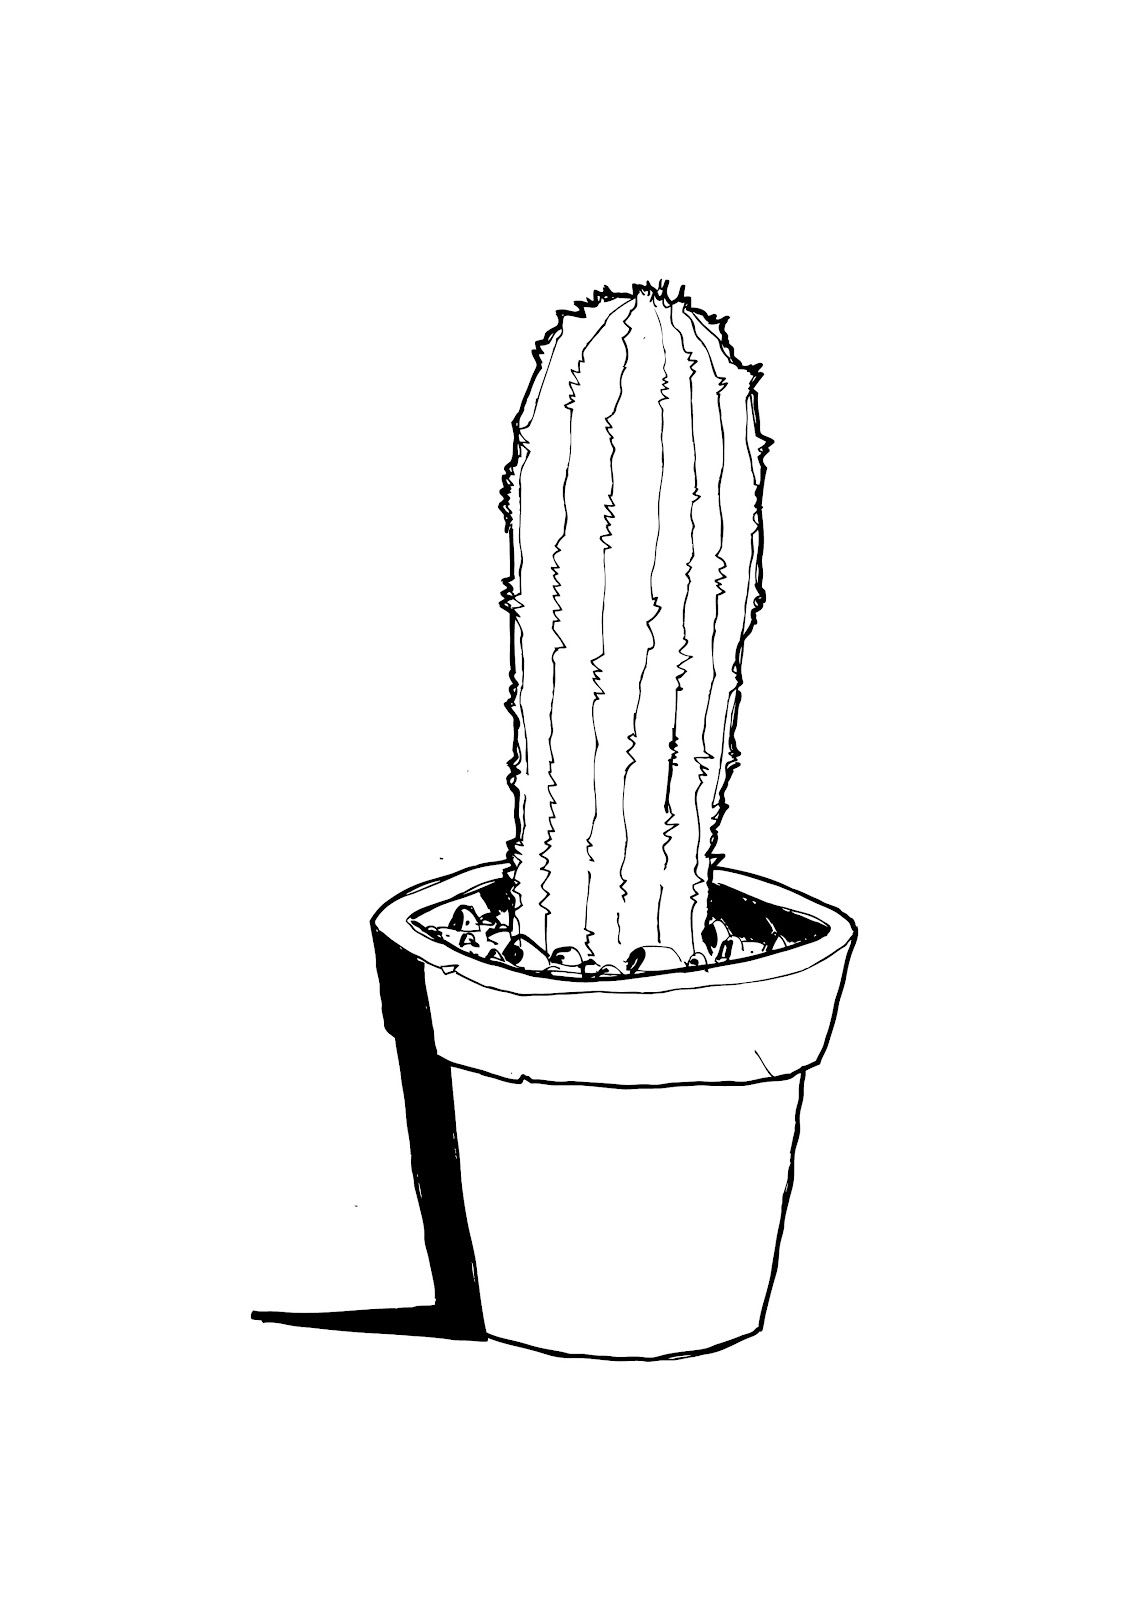 Drawn cactus minimalist.